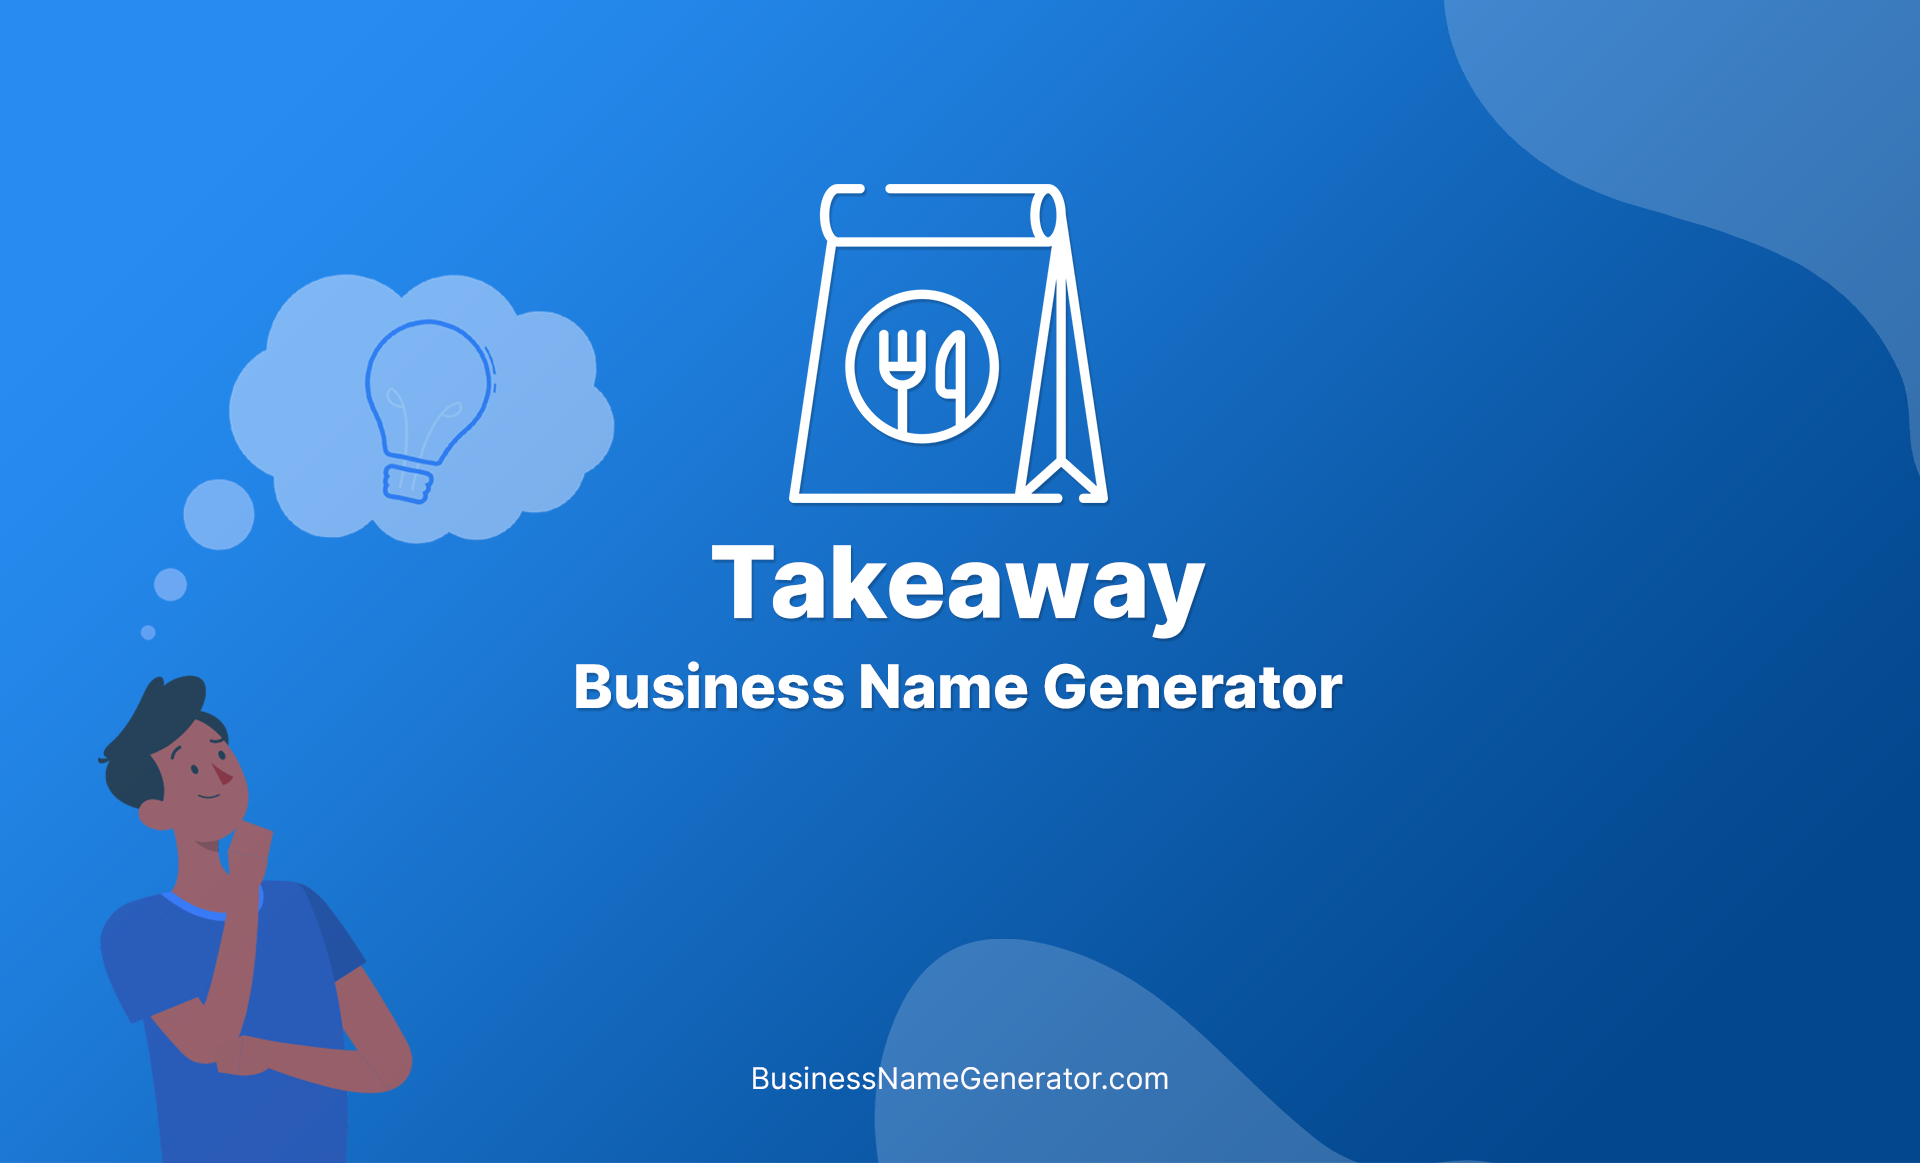 Takeaway Business Name Generator